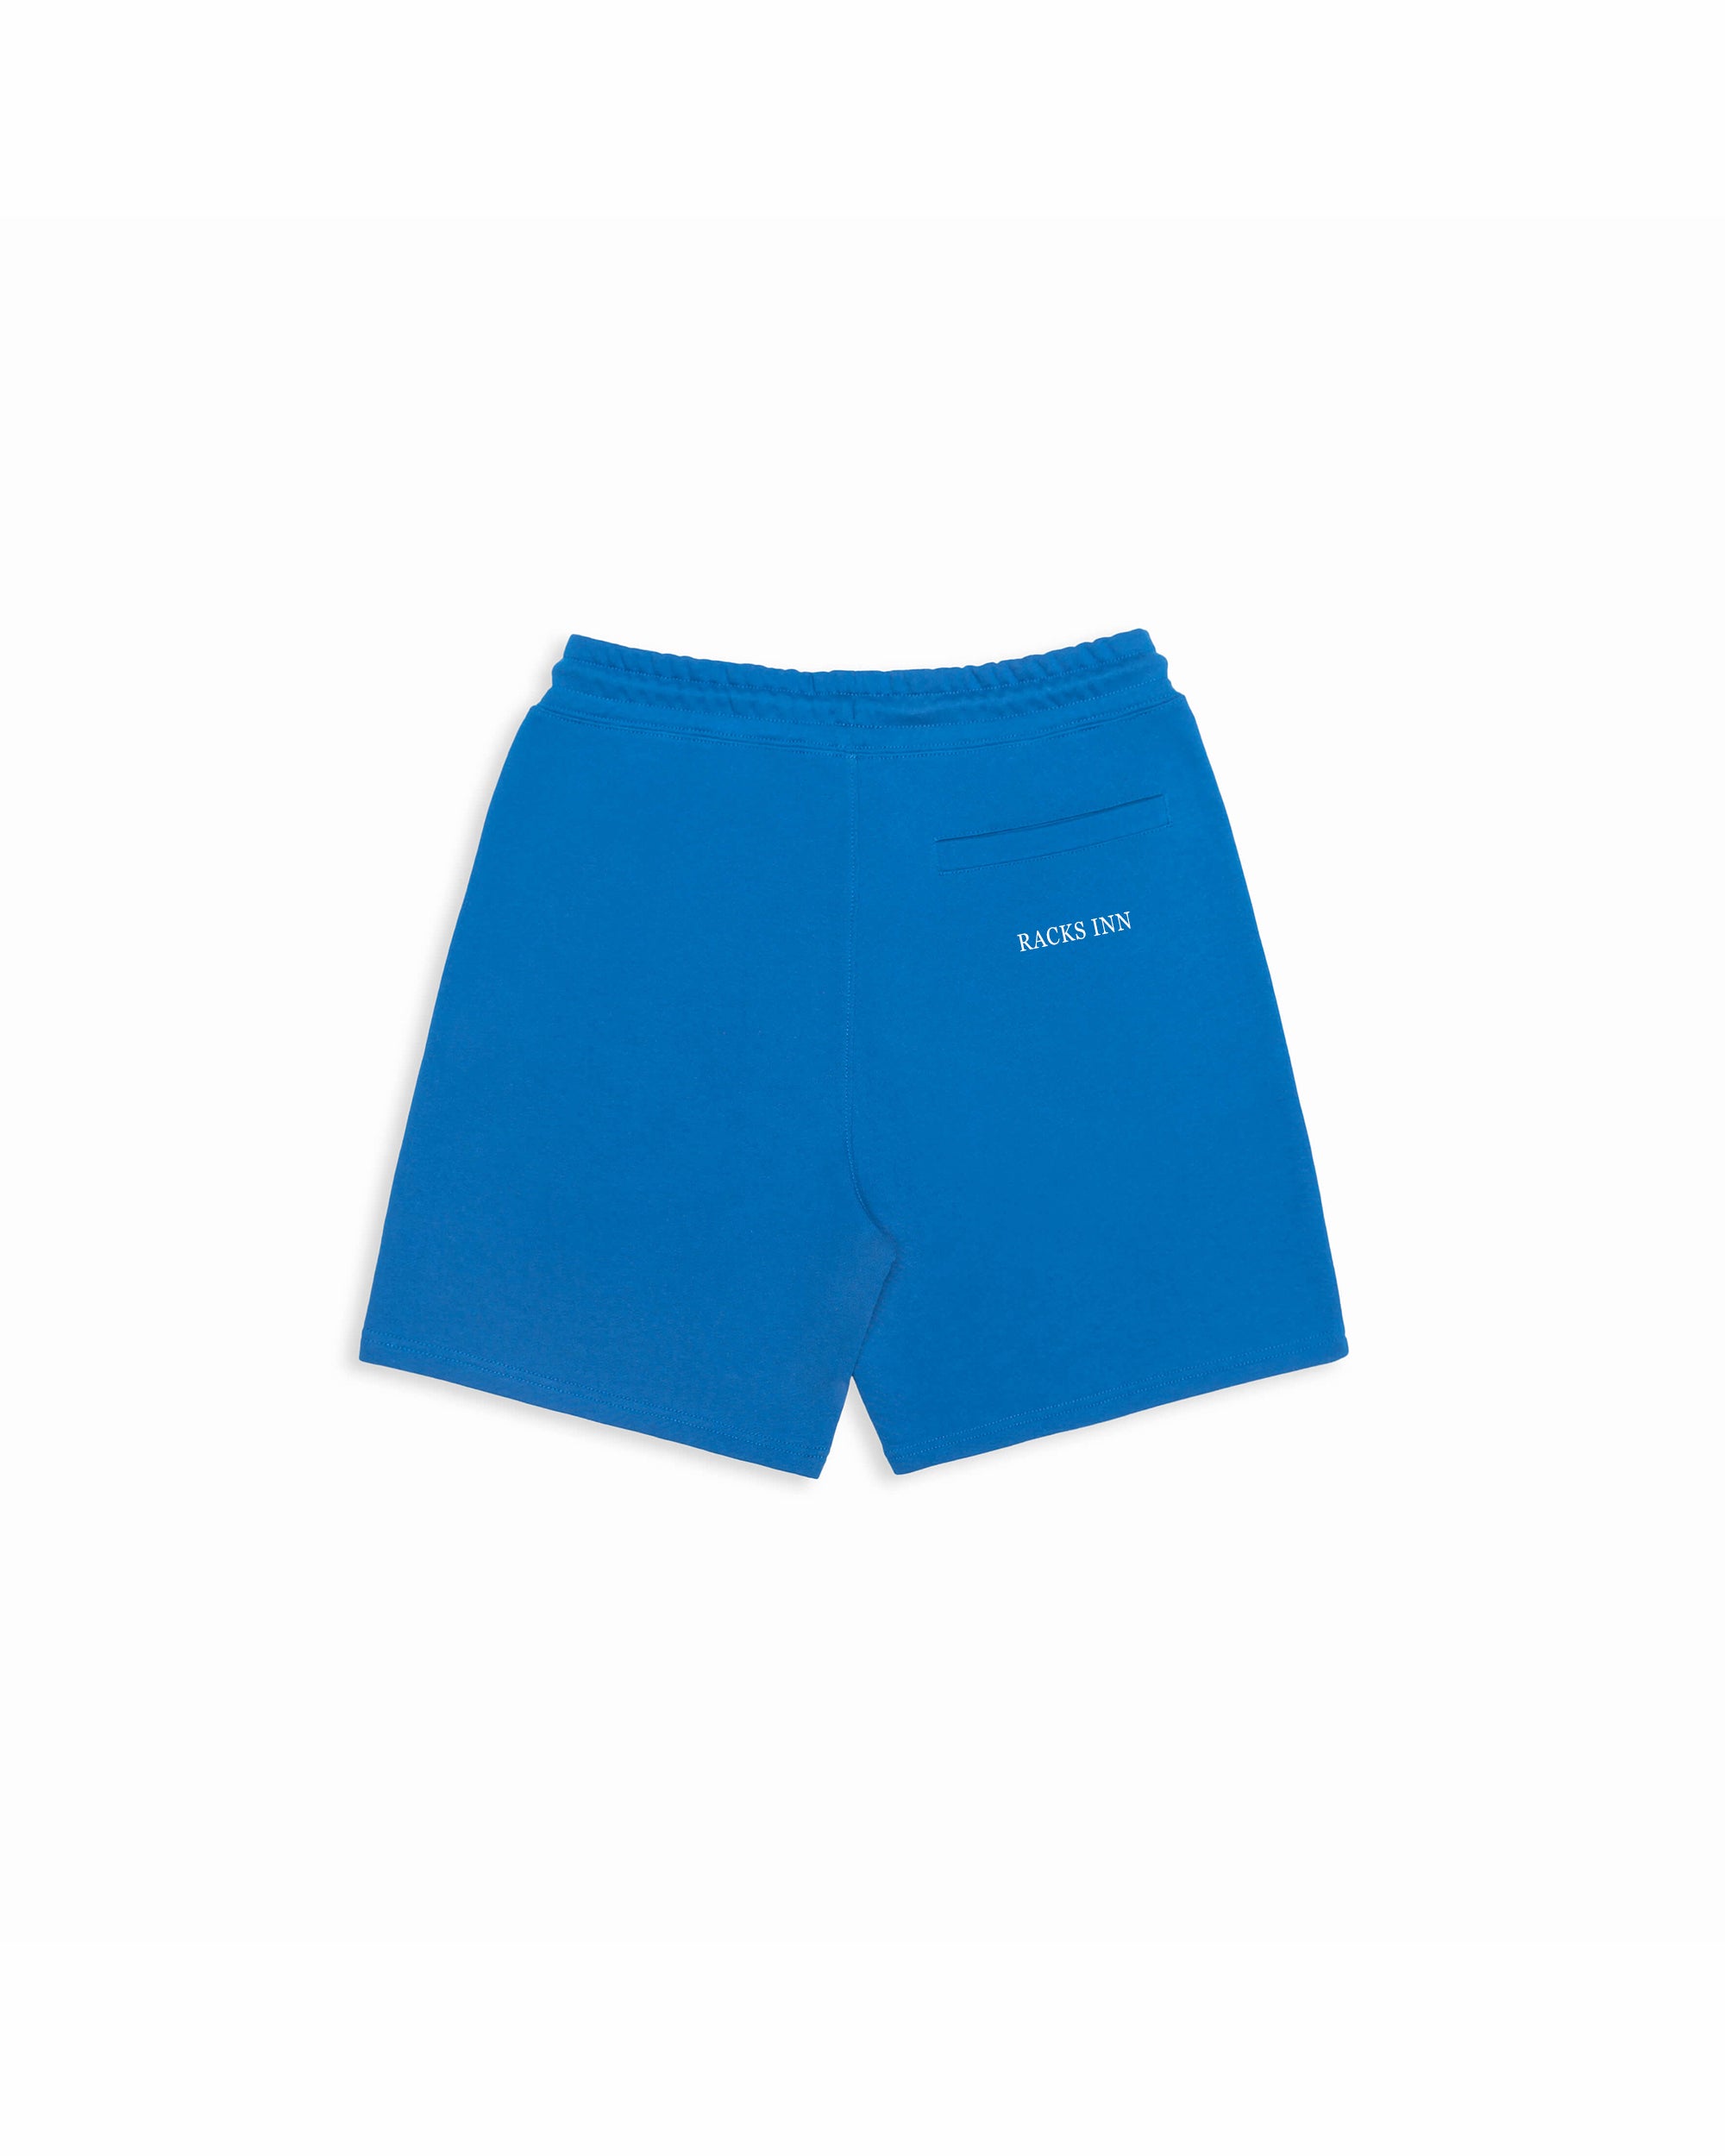 Monogram Shorts - French Blue